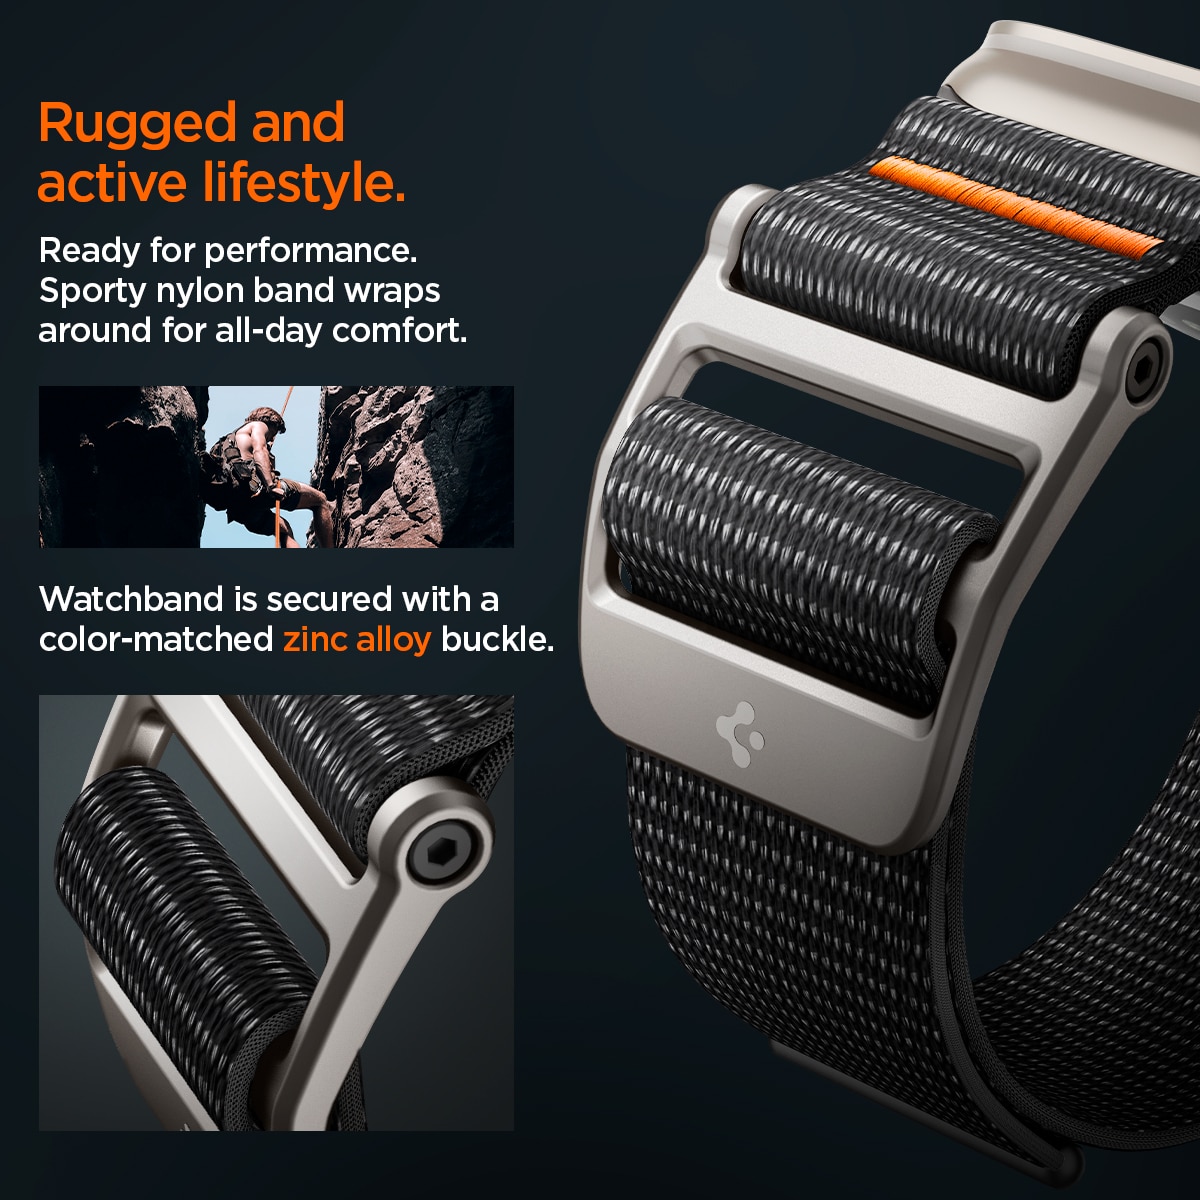 DuraPro Flex Ultra Apple Watch 42mm Black